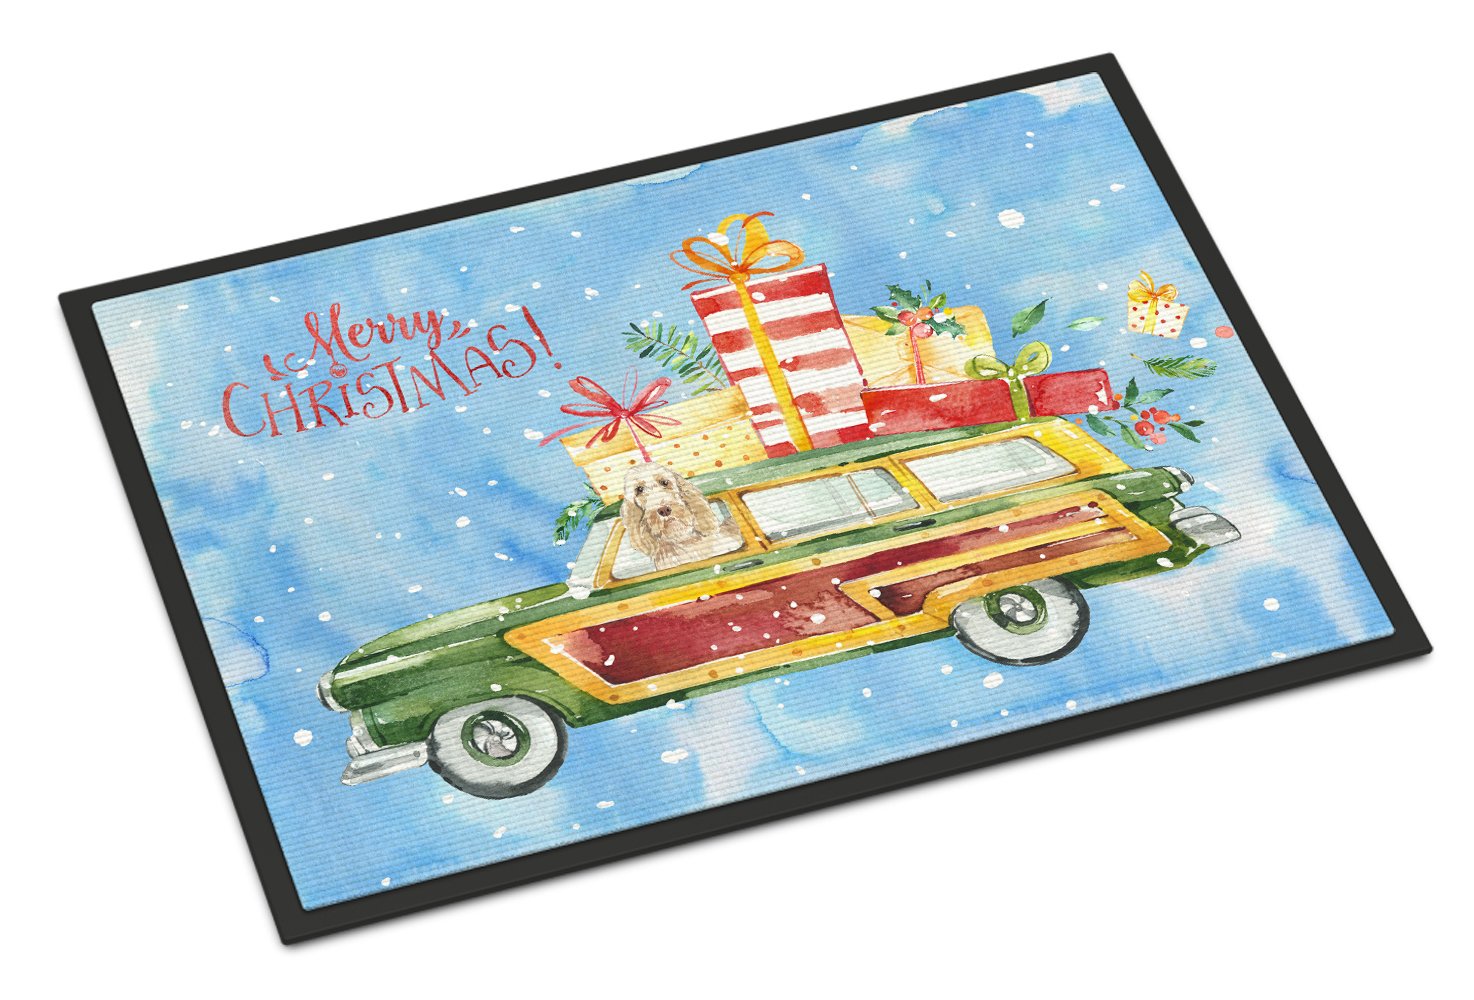 Merry Christmas Spinone Italiano Indoor or Outdoor Mat 24x36 CK2425JMAT by Caroline's Treasures